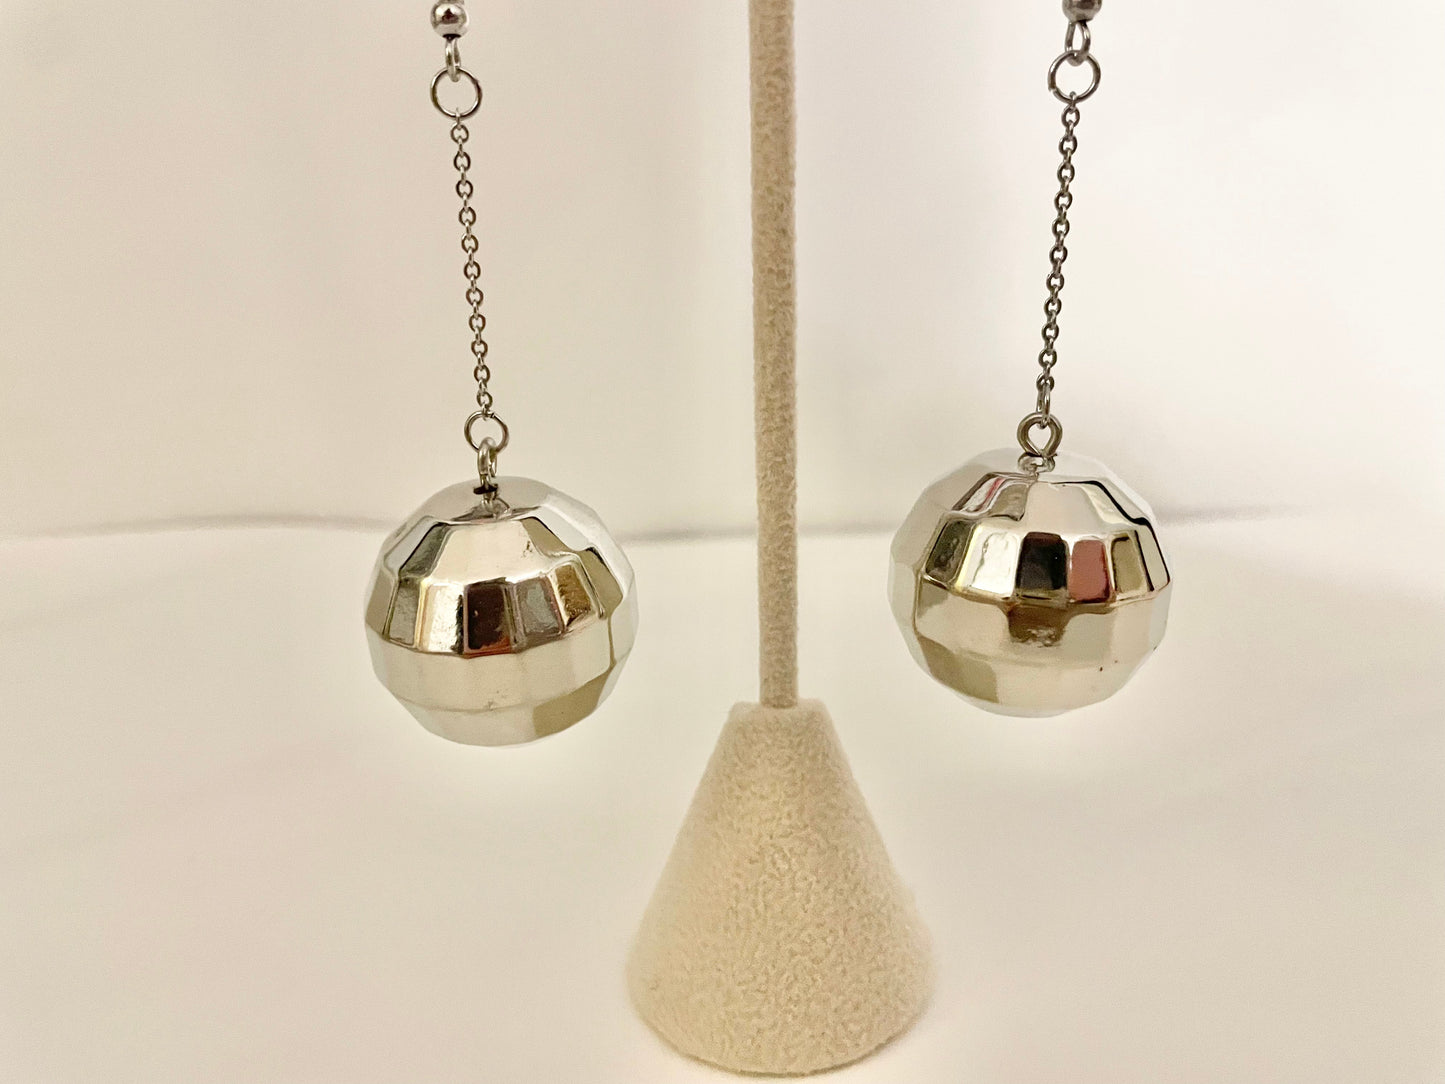 Silver disco ball earrings